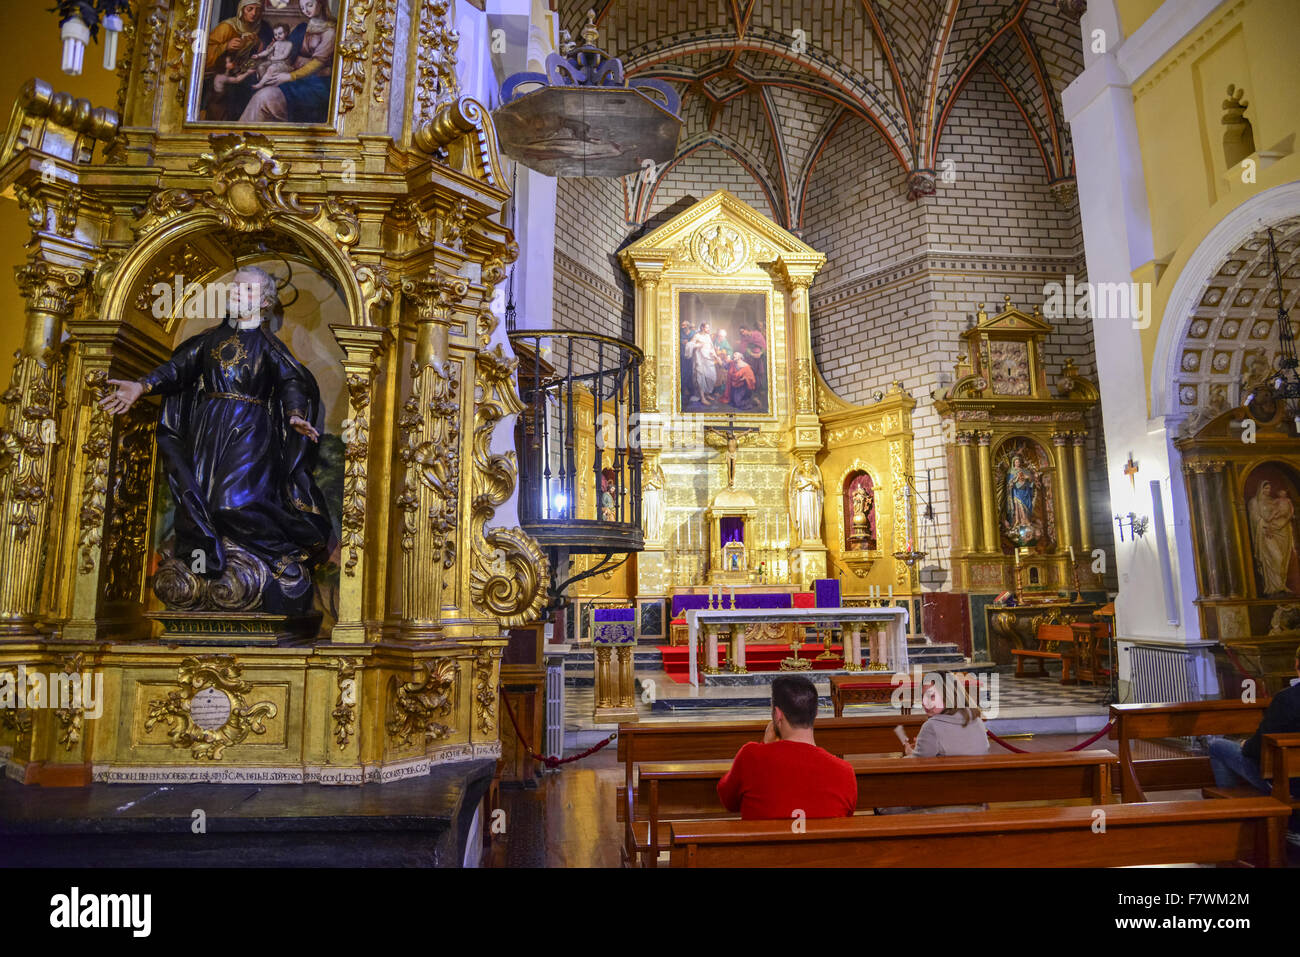 Interior of Iglesia de Santo Tome, Toledo, Spain Stock Photo - Alamy